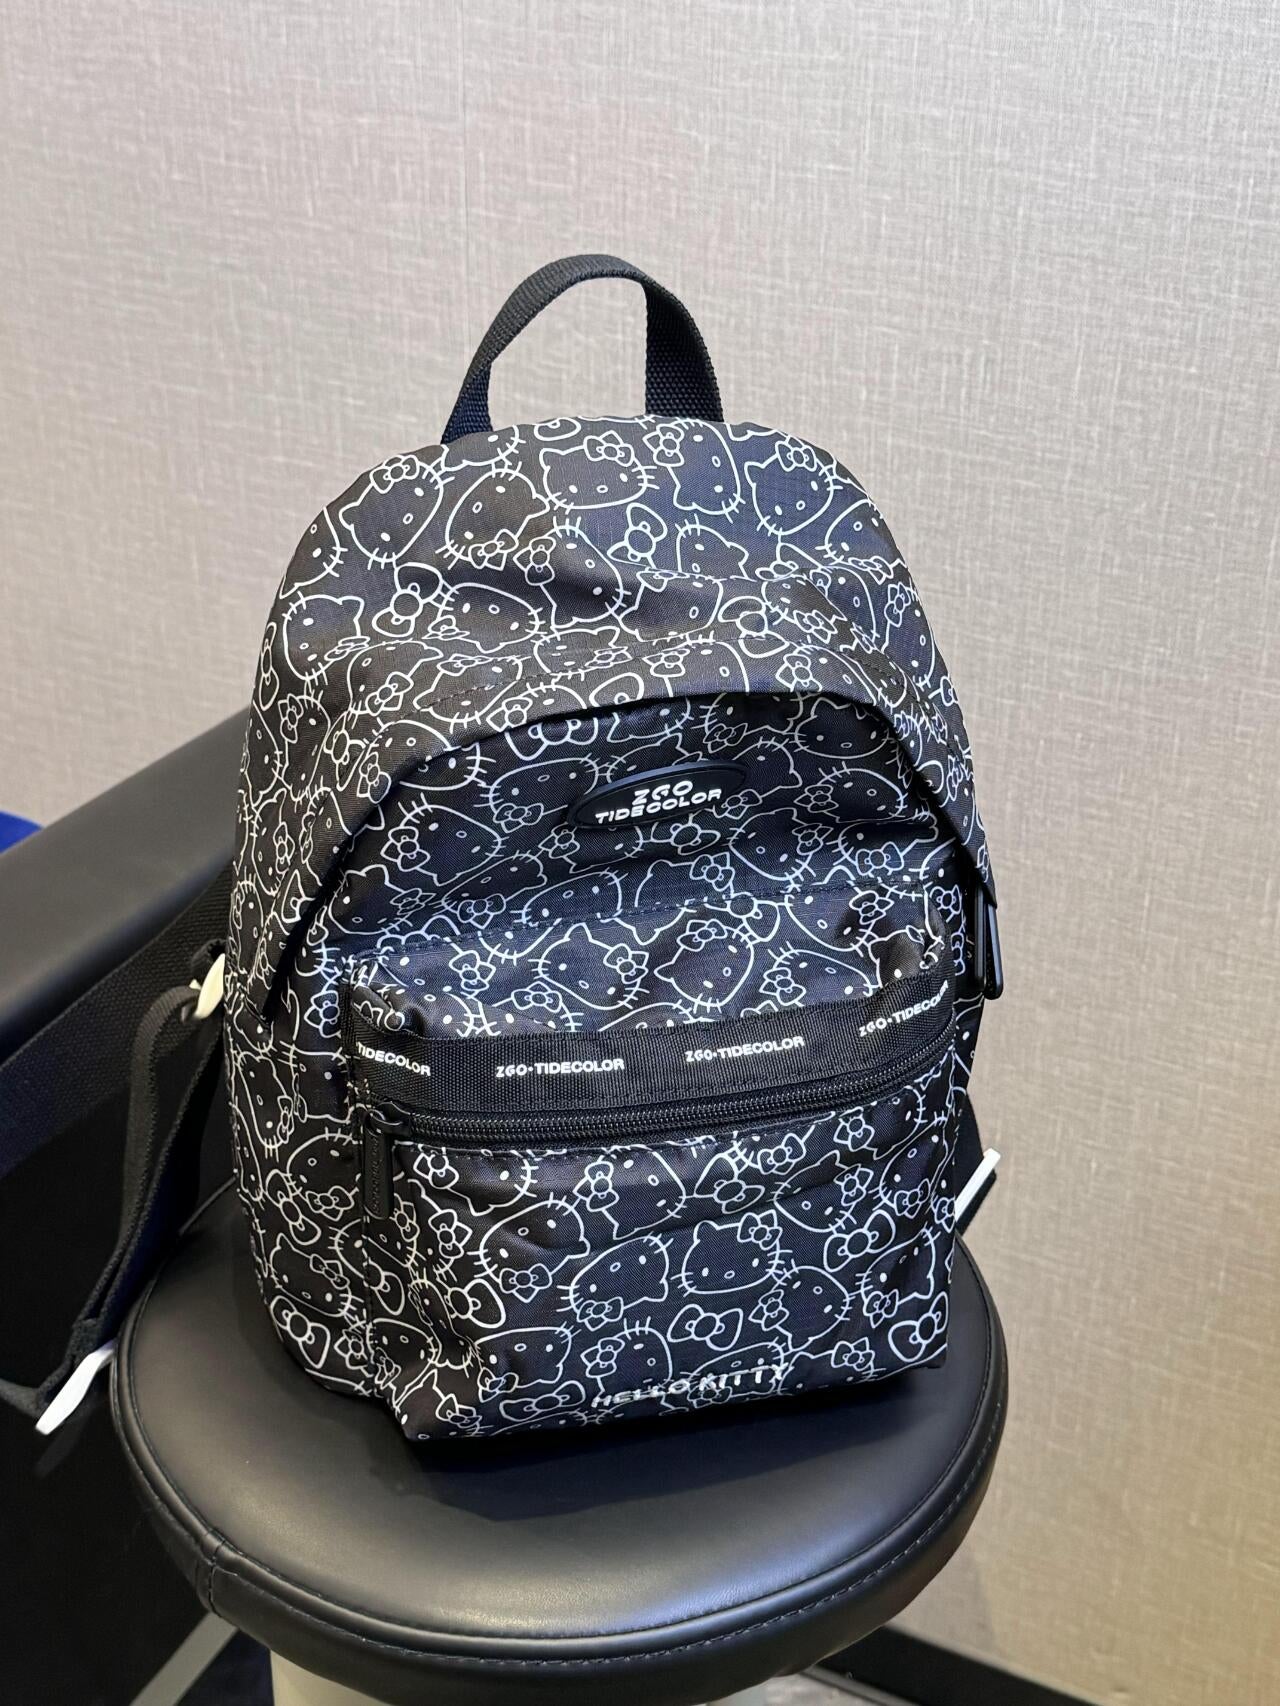 Sanrio Cute Canvas Backpack Laptop Backpack Casual Shoulder Bag Satchel Daypack